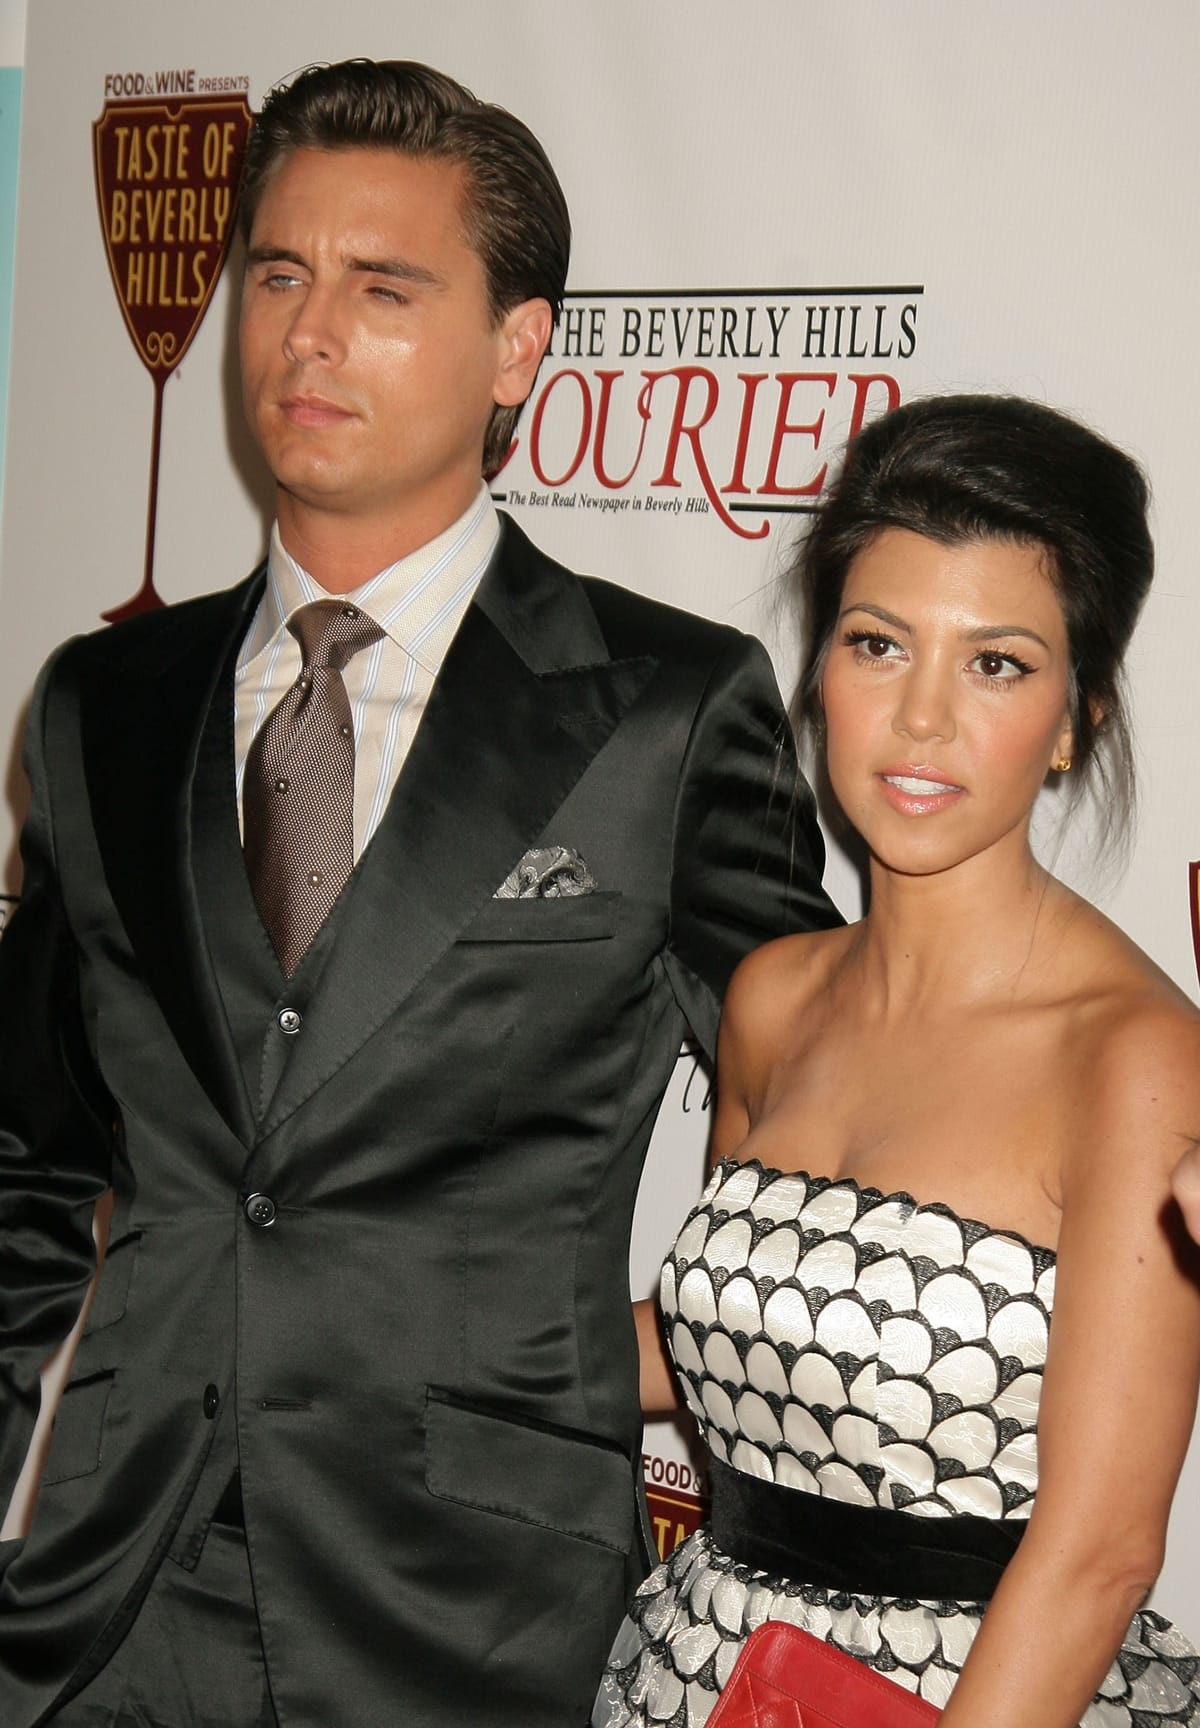 Scott Disick and Kourtney Kardashian never married but share three children together